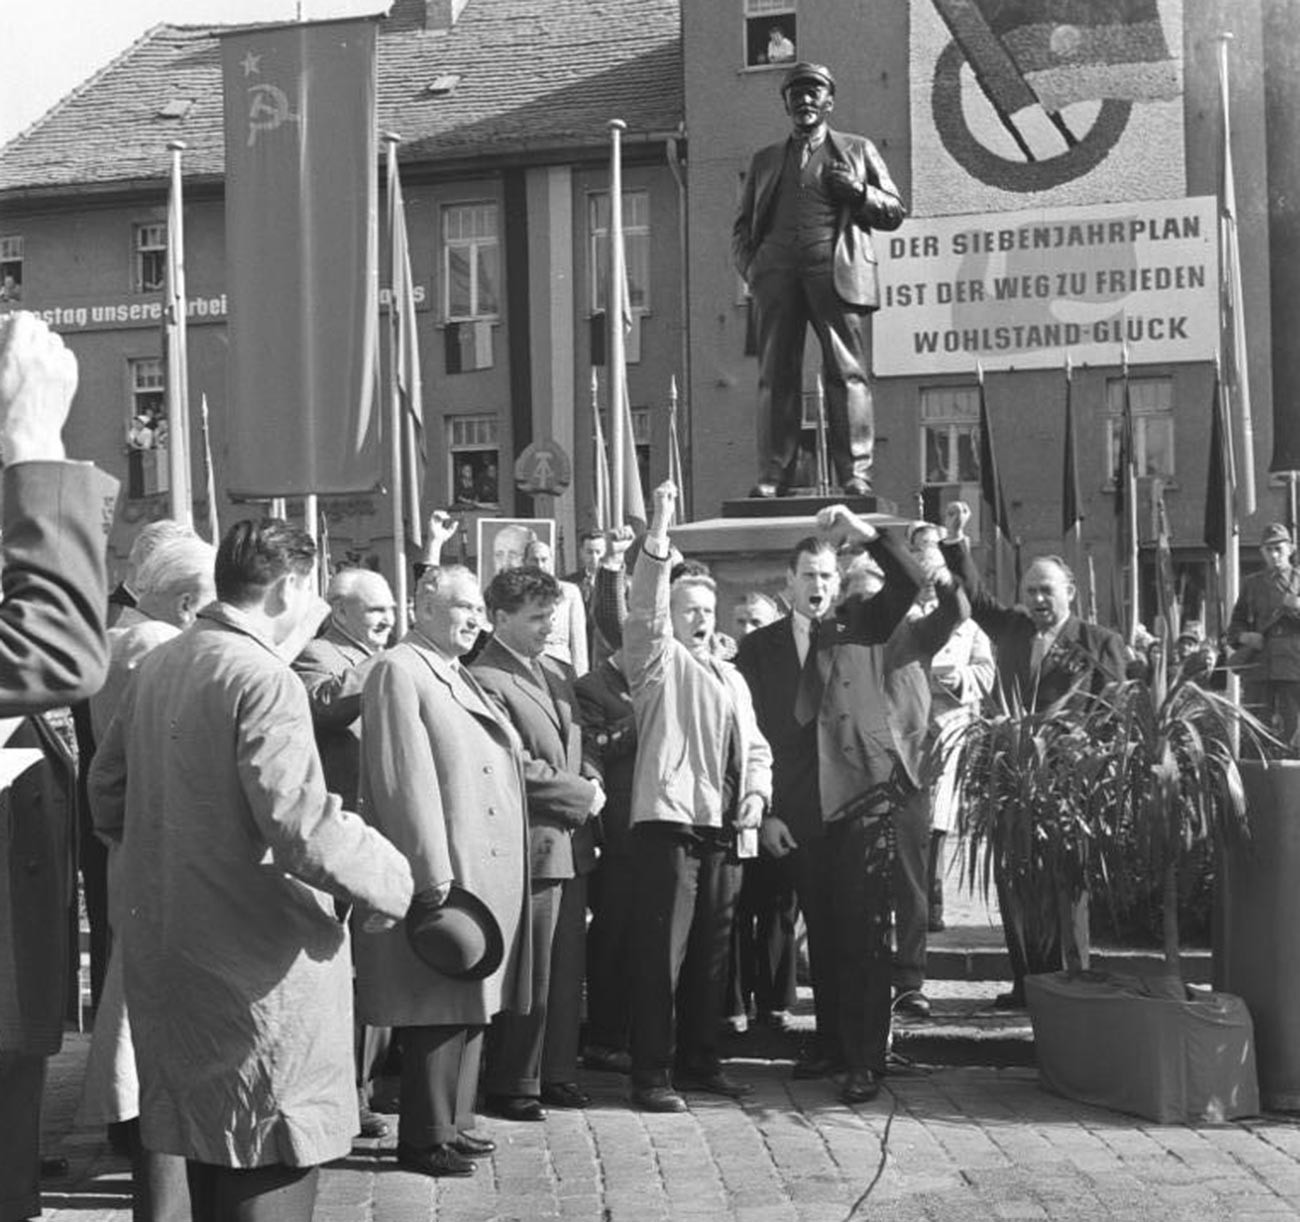 The Soviet delegation in Eisleben, German Democratic Republic, 1959